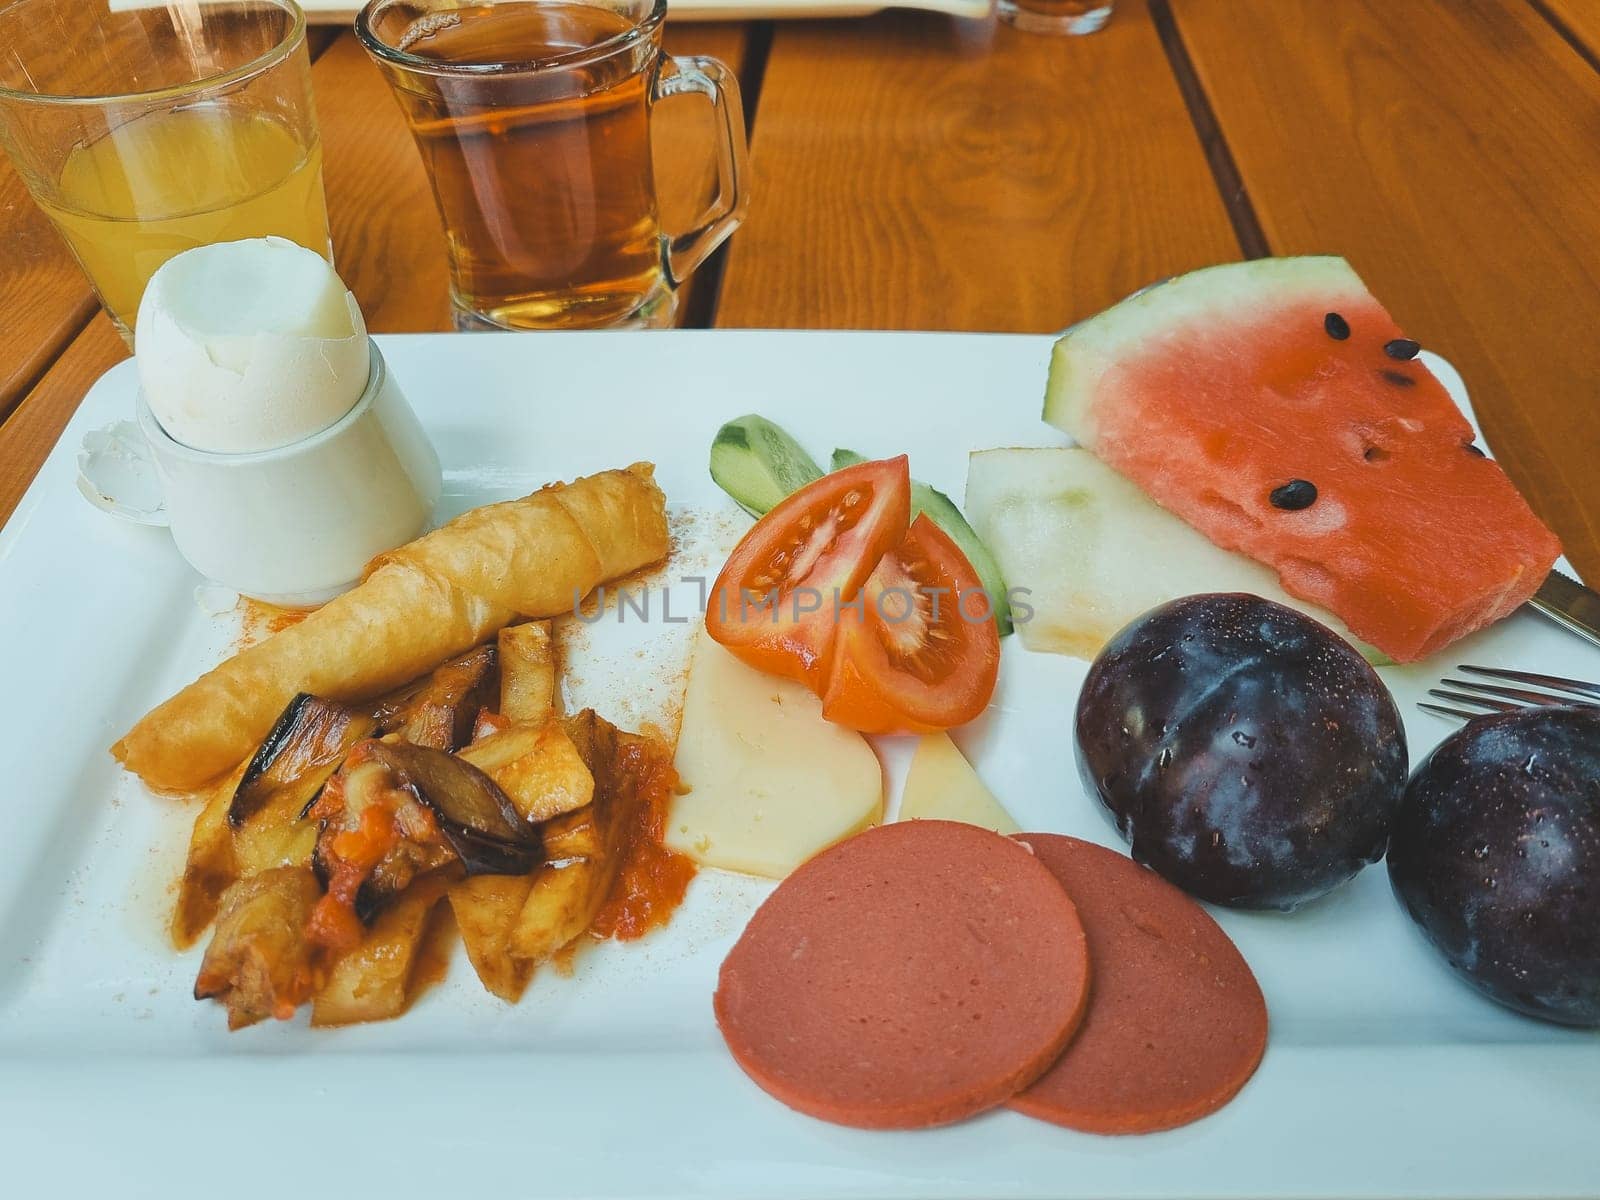 Turkish breakfast. boiled egg, sausage, cheese, vegetables, fruits, orange juice and tea. by Leoschka